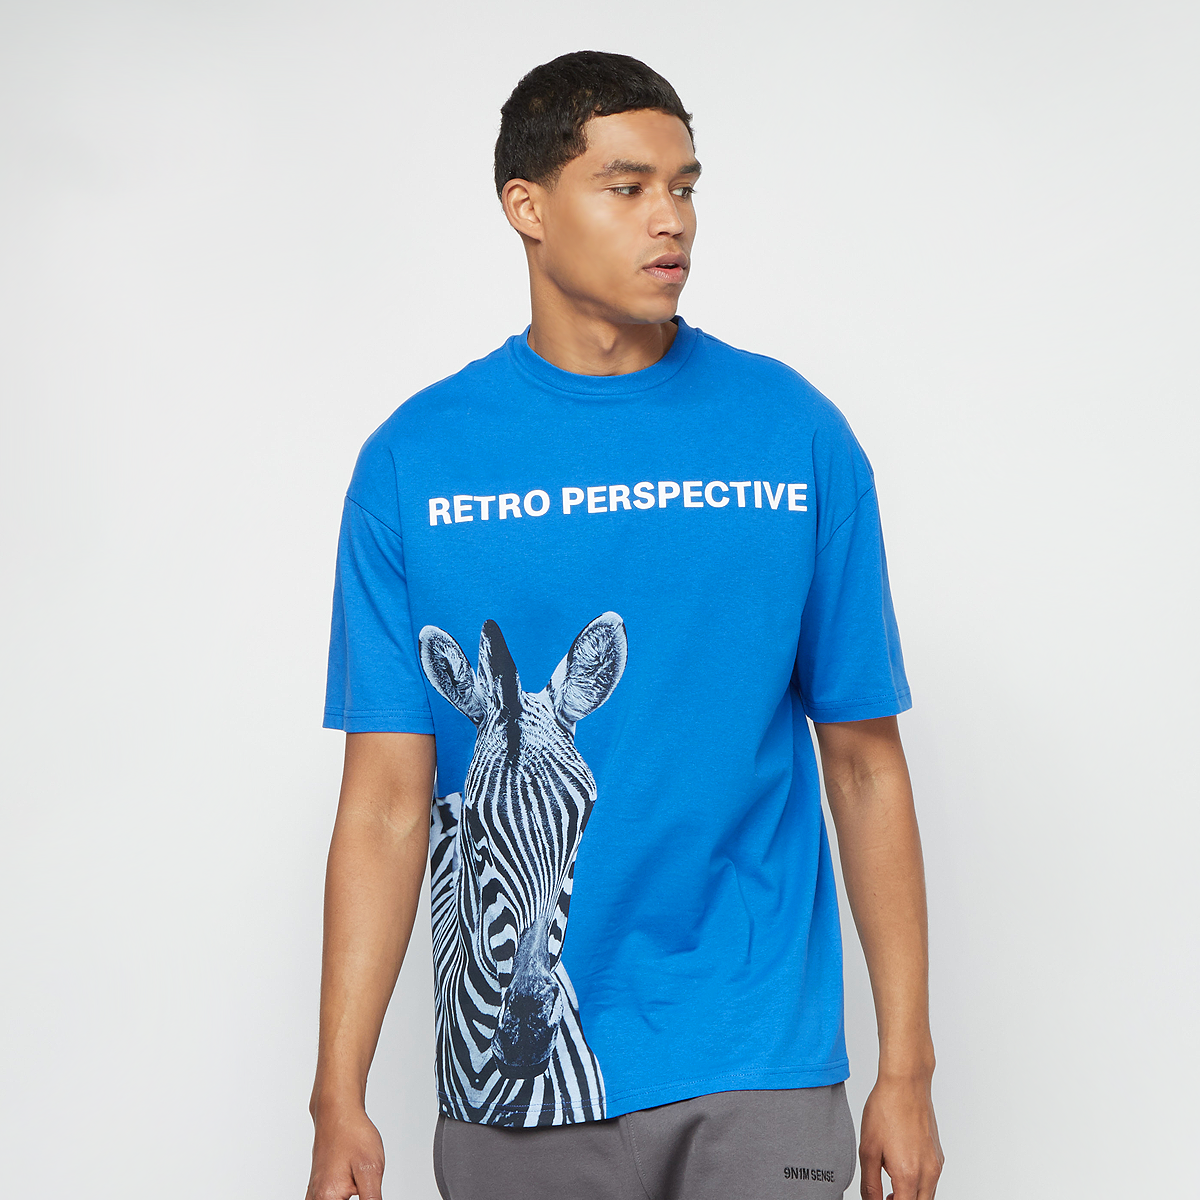 Zebra T-Shirt